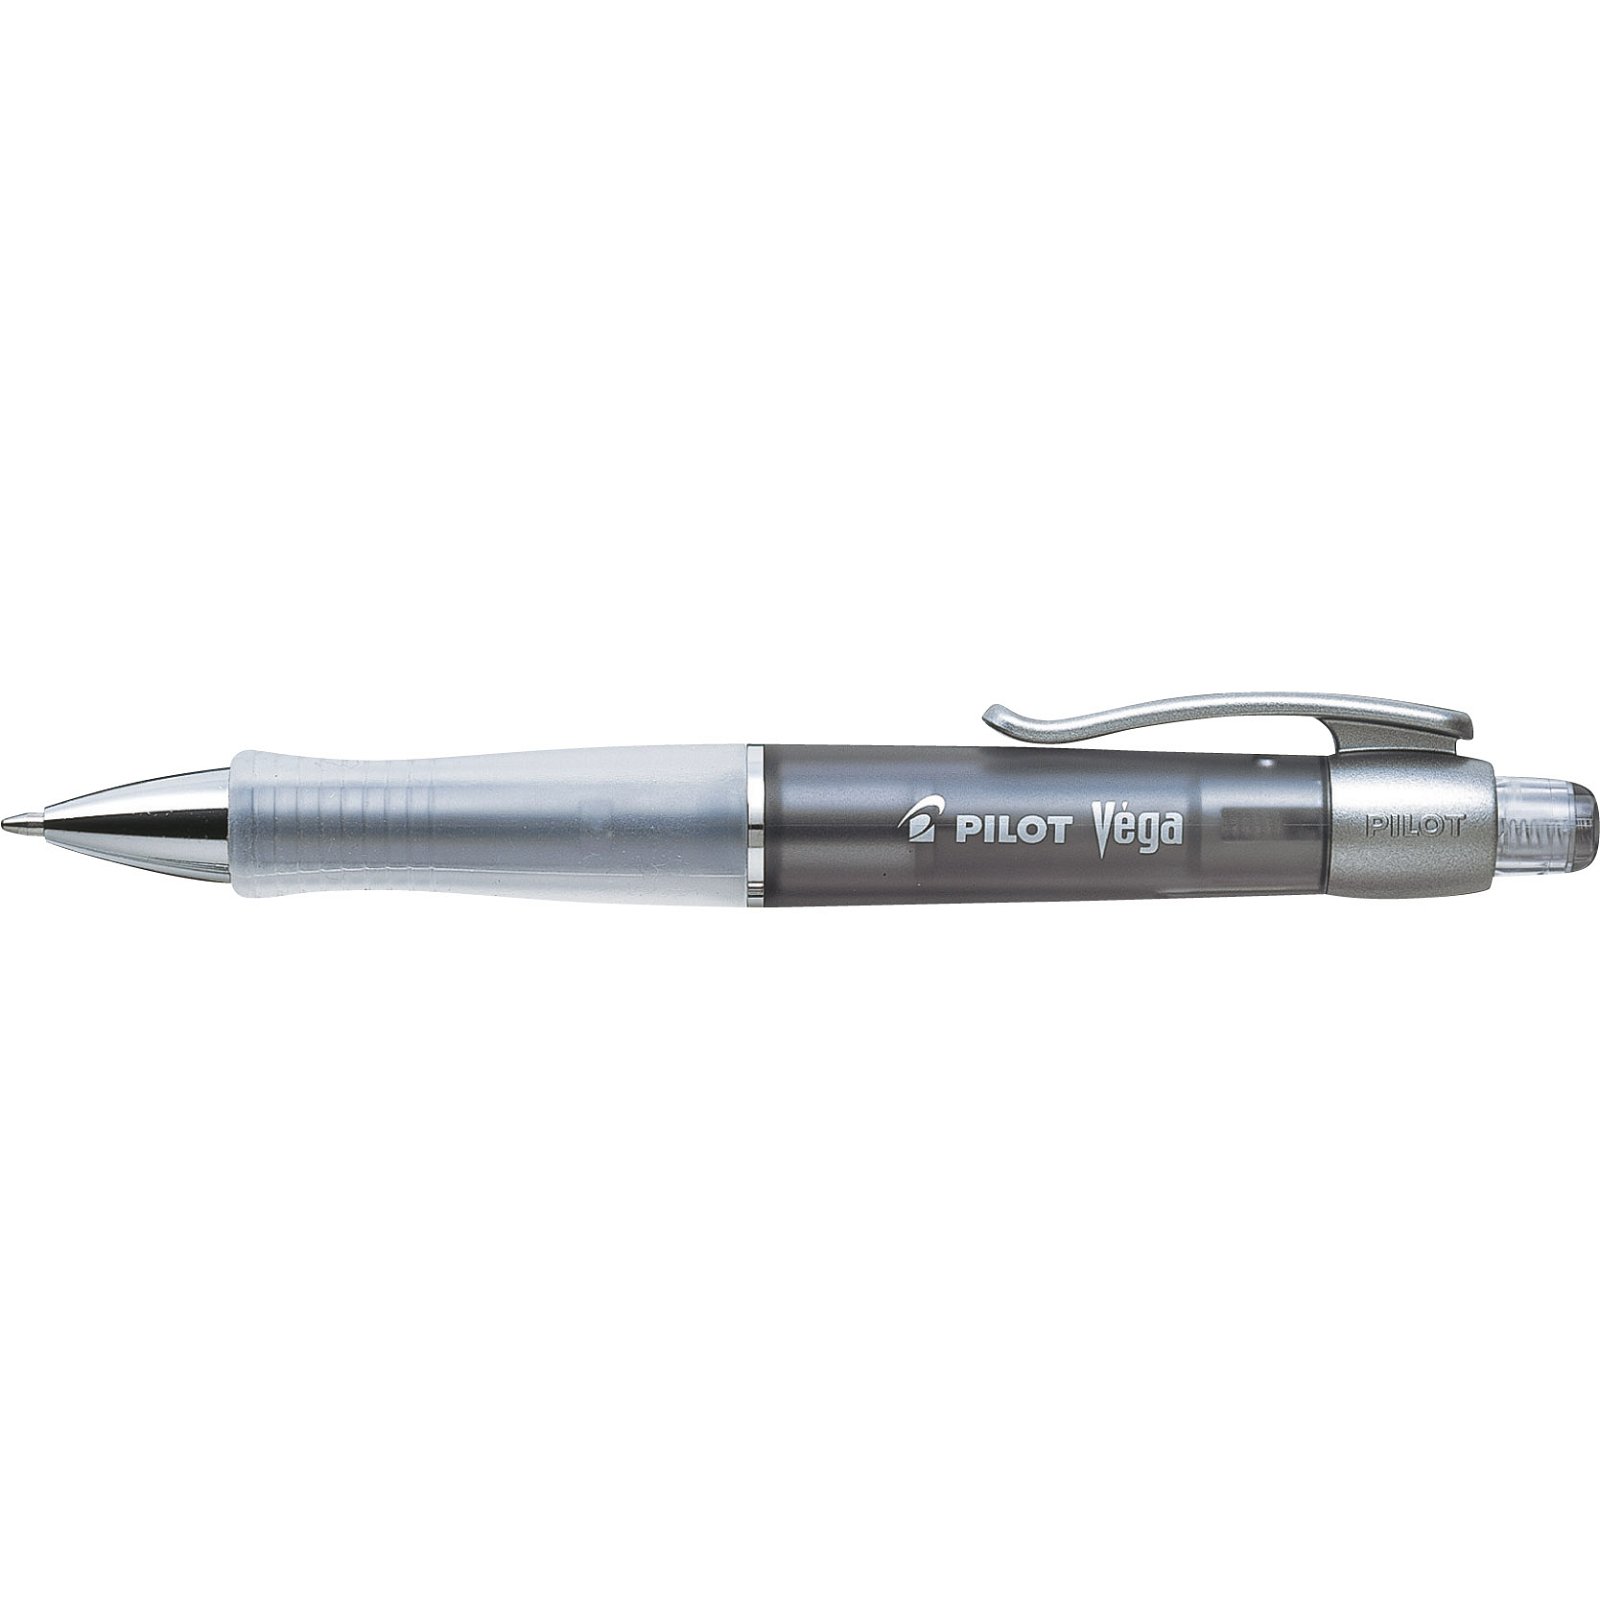 Pilot Vega pen 0,3mm sort